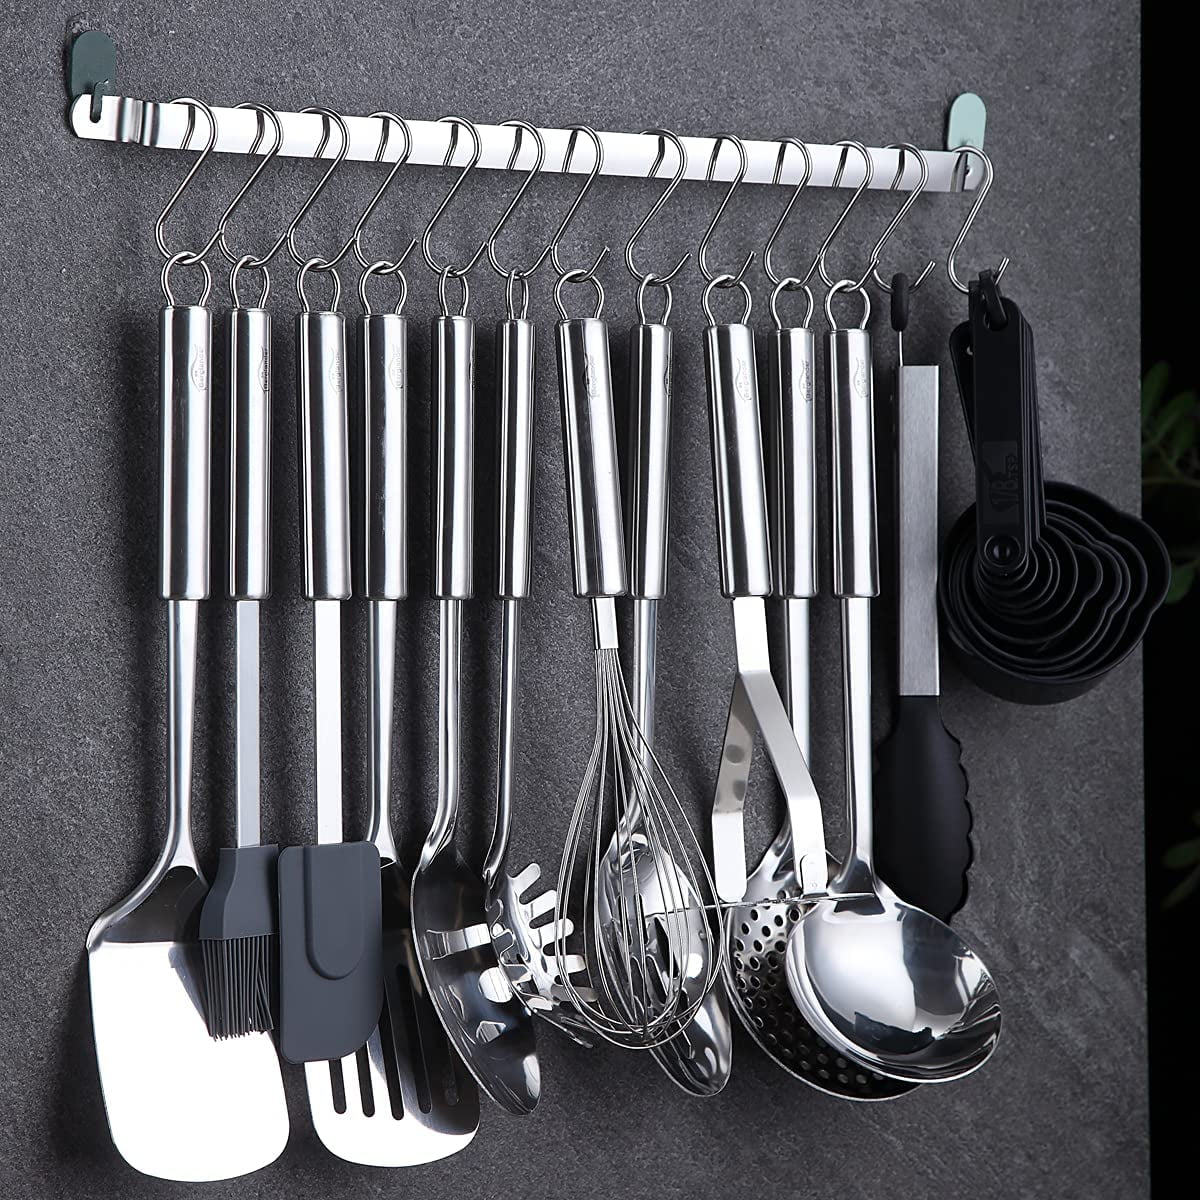 13 Pieces Kitchen Utensils Set, Kitchen Tools Set with Utensil Holder ASA